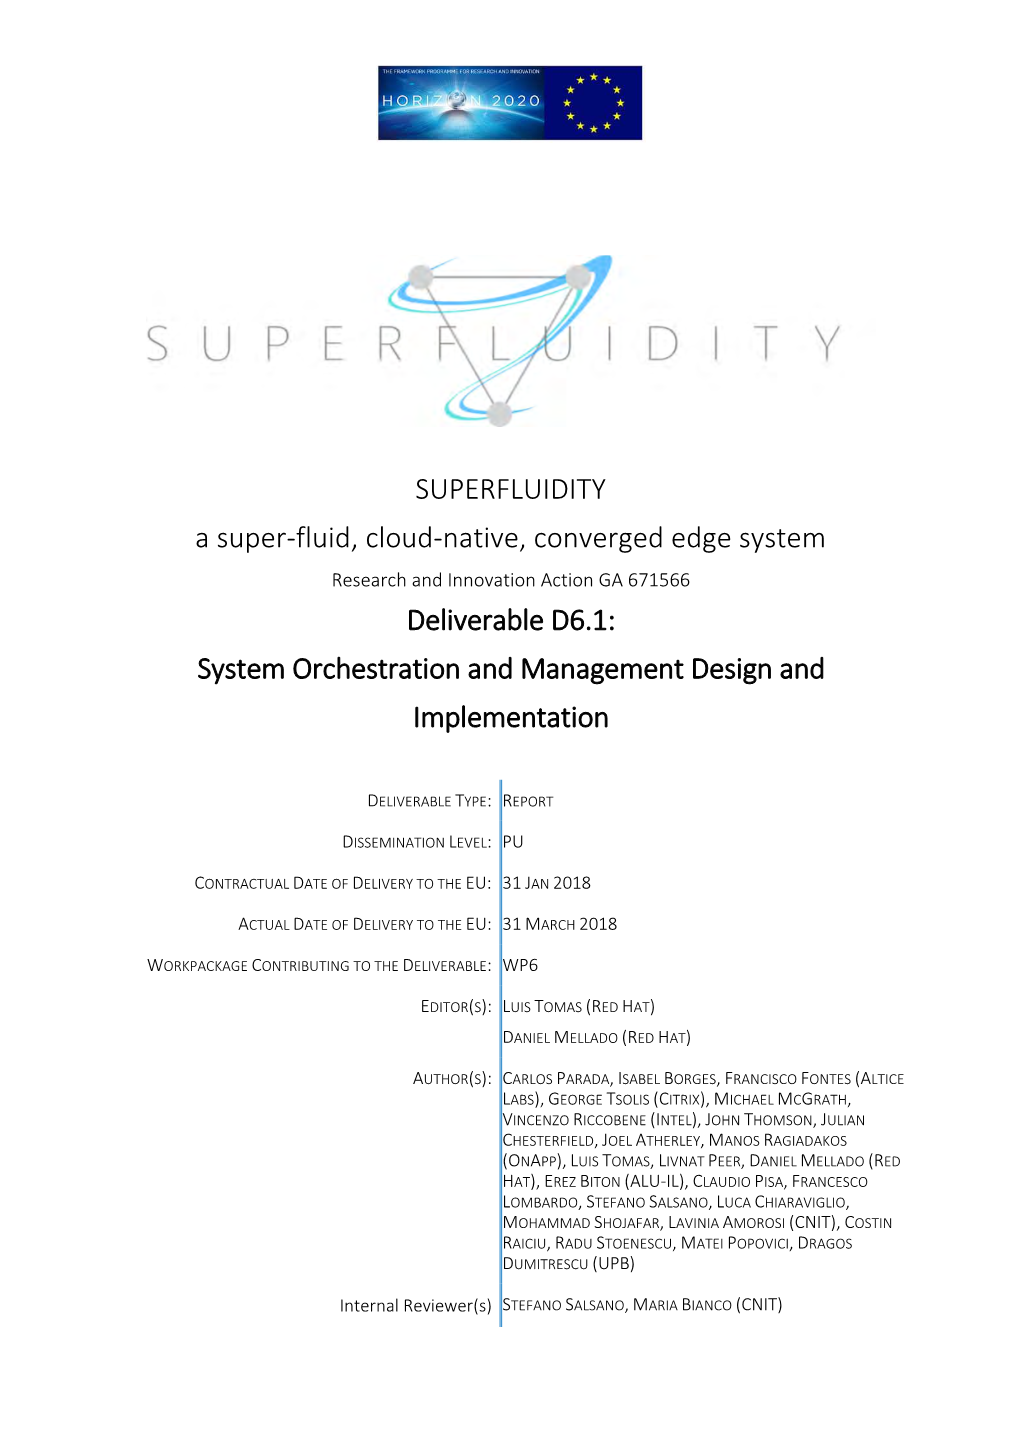 Deliverable D6.1: System Orchestration and Management Design and Implementation